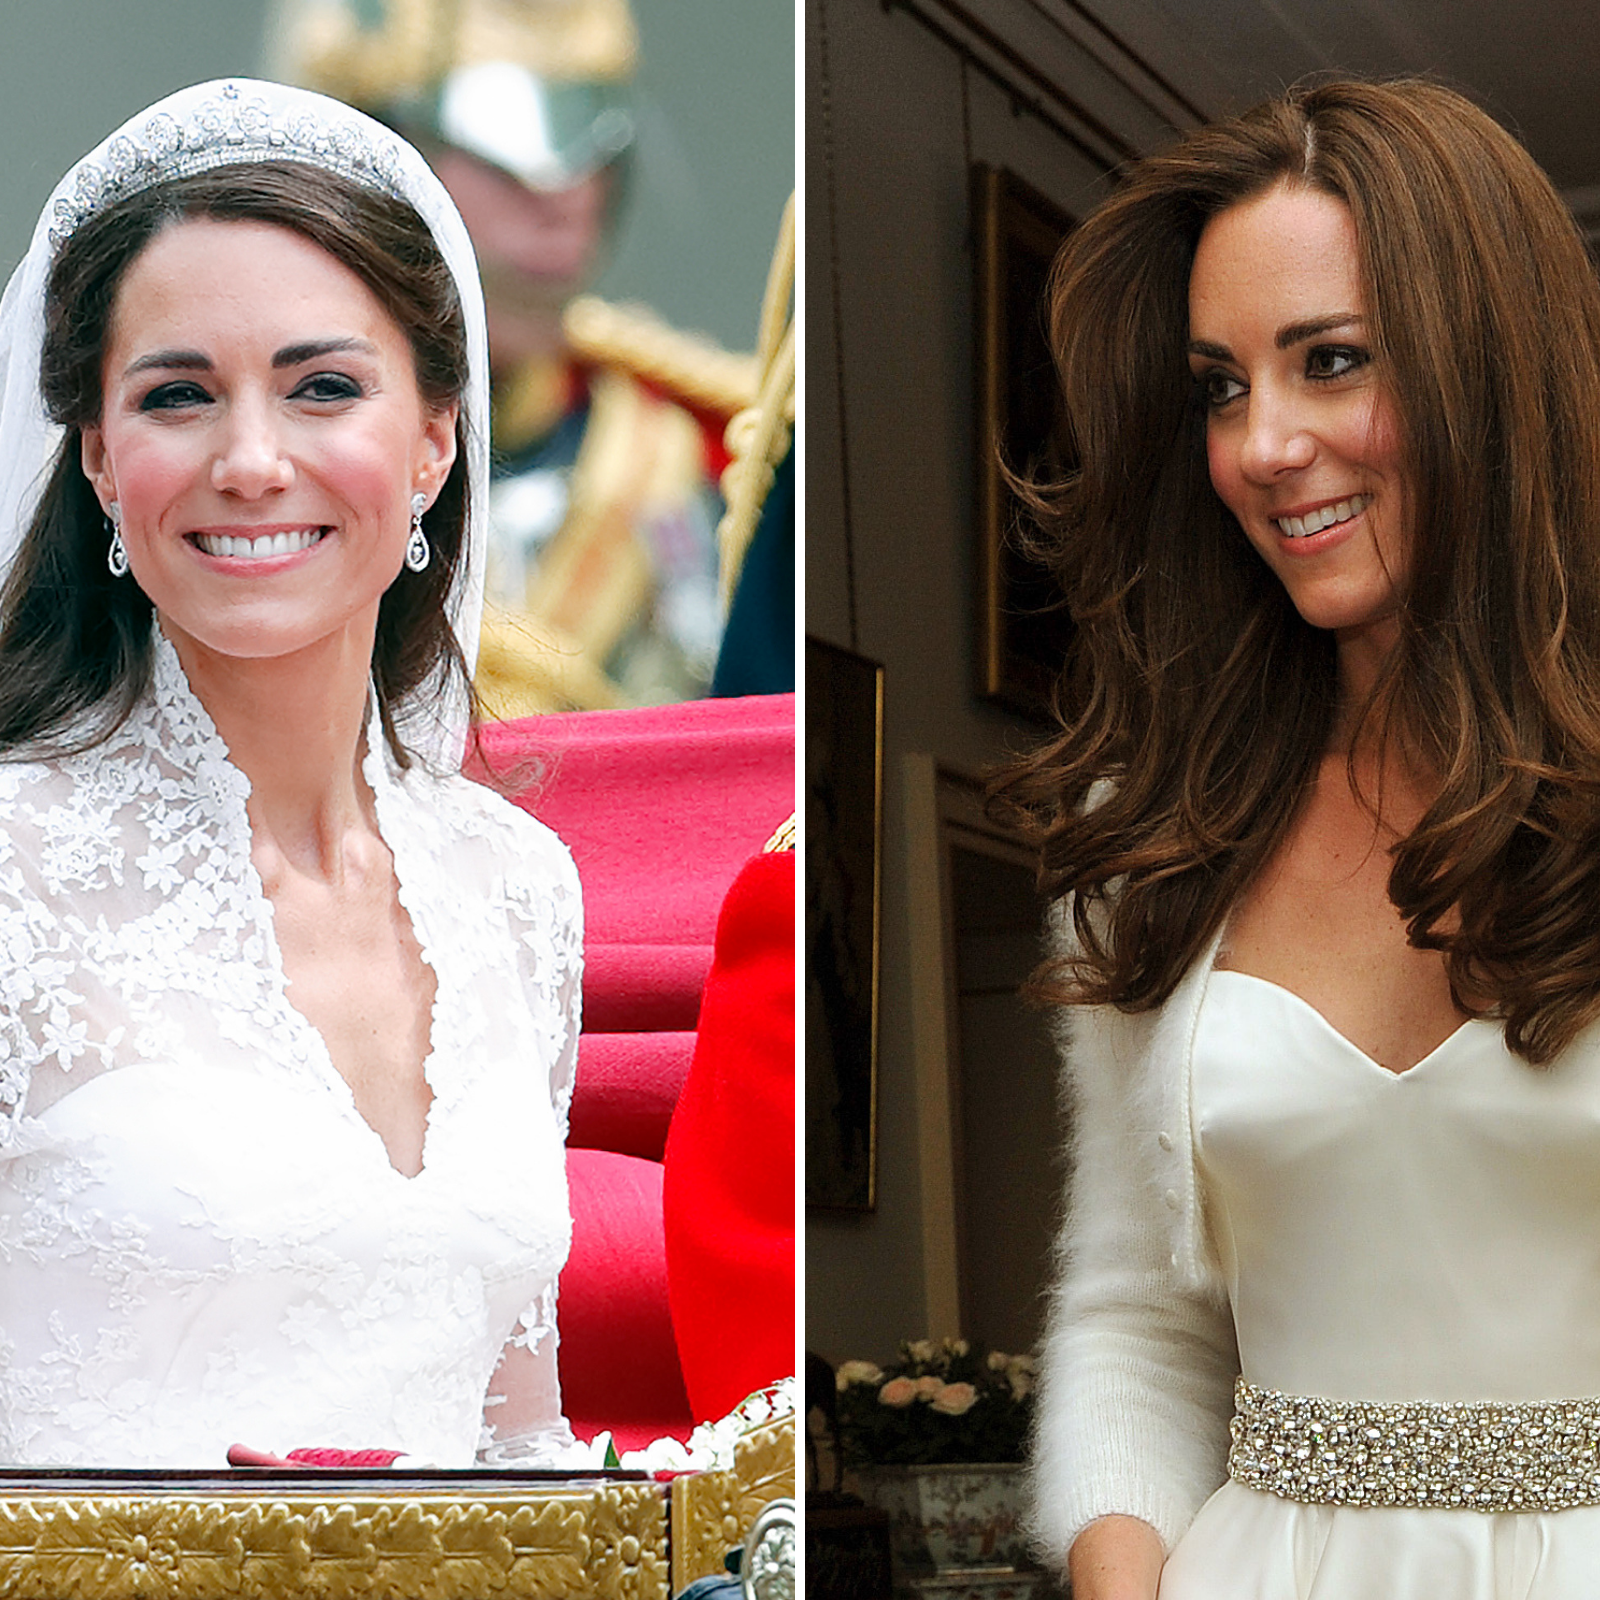 Kate Middleton's 'Second Dress' Goes TikTok: 'Beautiful'